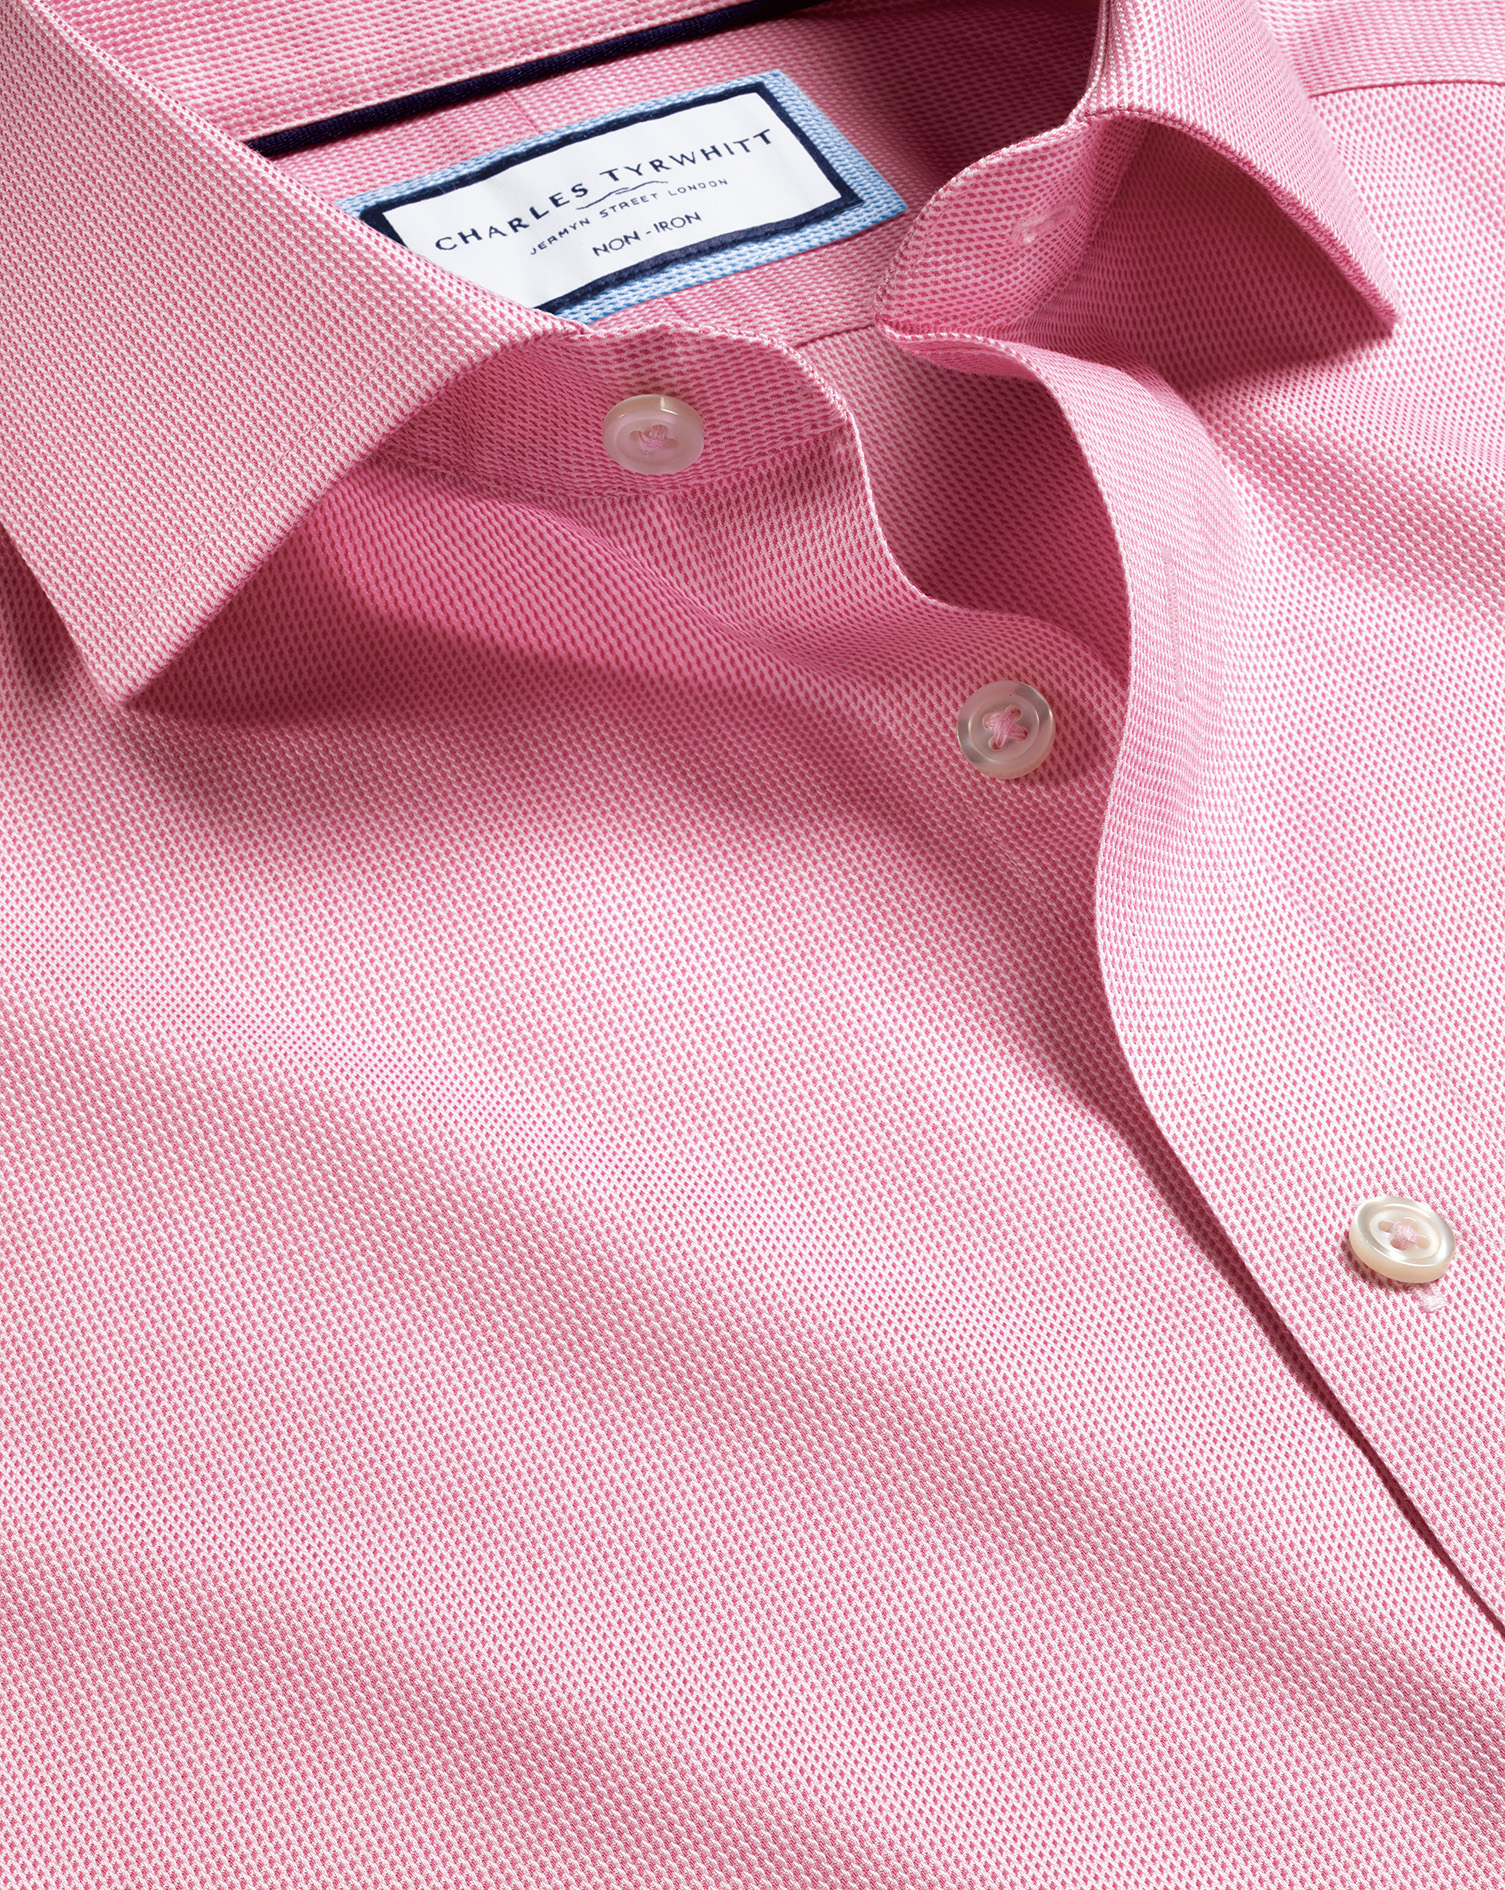 Men's Charles Tyrwhitt Cutaway Collar Non-Iron Clifton Weave Dress Shirt - Pink Single Cuff Size 15.